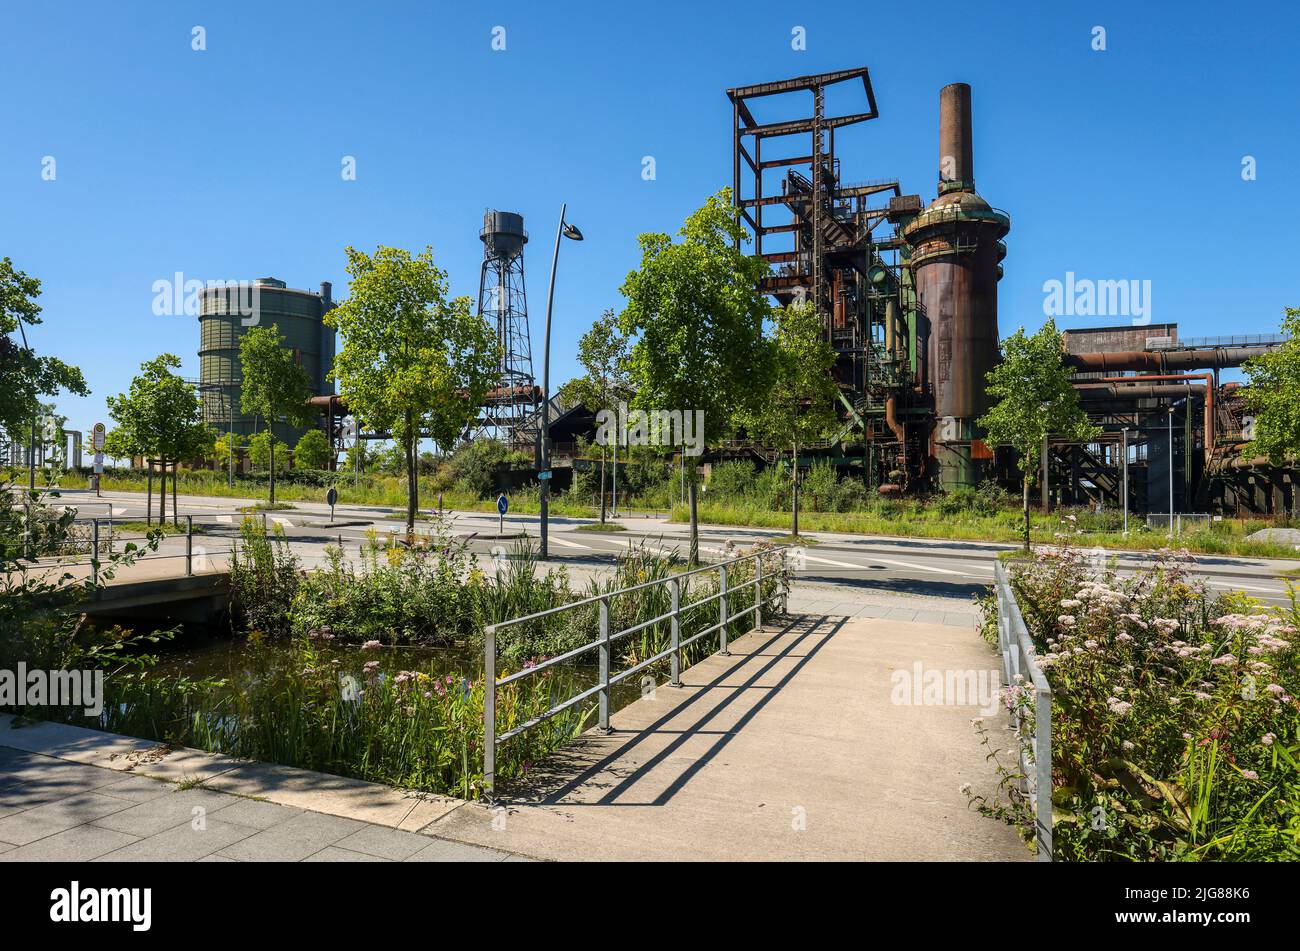 Phoenix West blast furnace plant, Phoenixpark, Dortmund, North Rhine-Westphalia, Germany Stock Photo